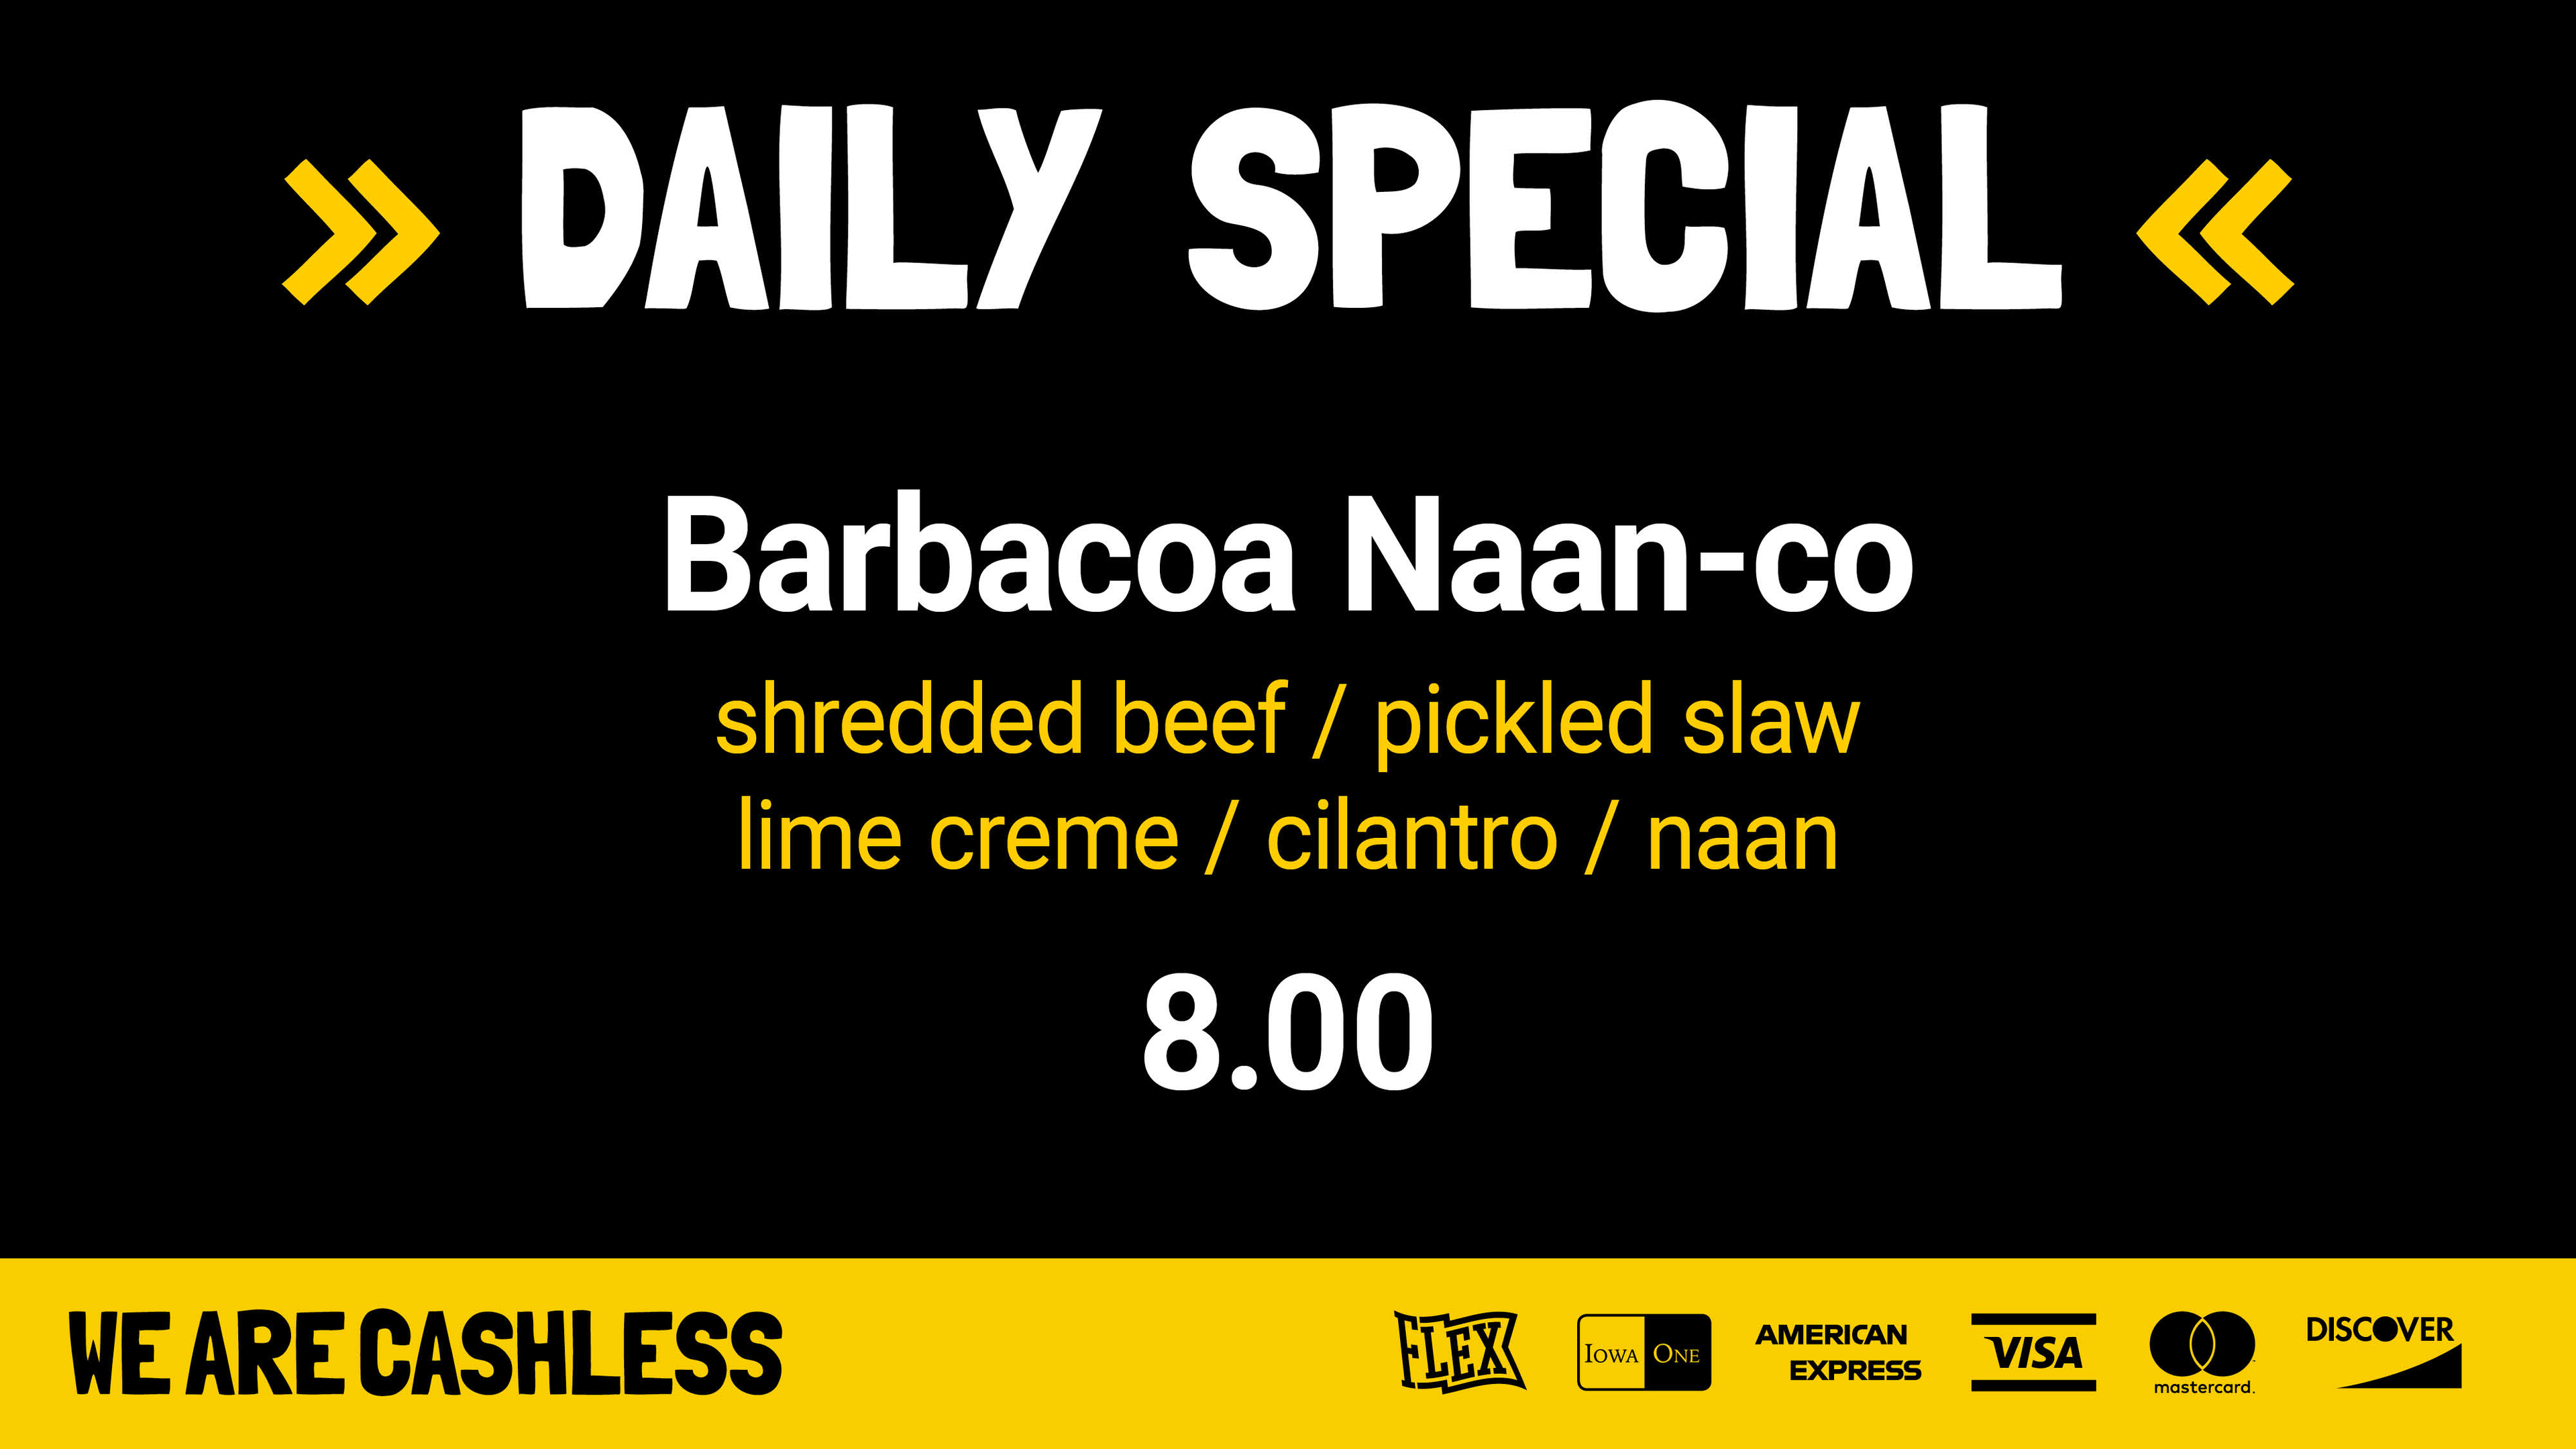 Daily special: Barbacoa taco in naan bread